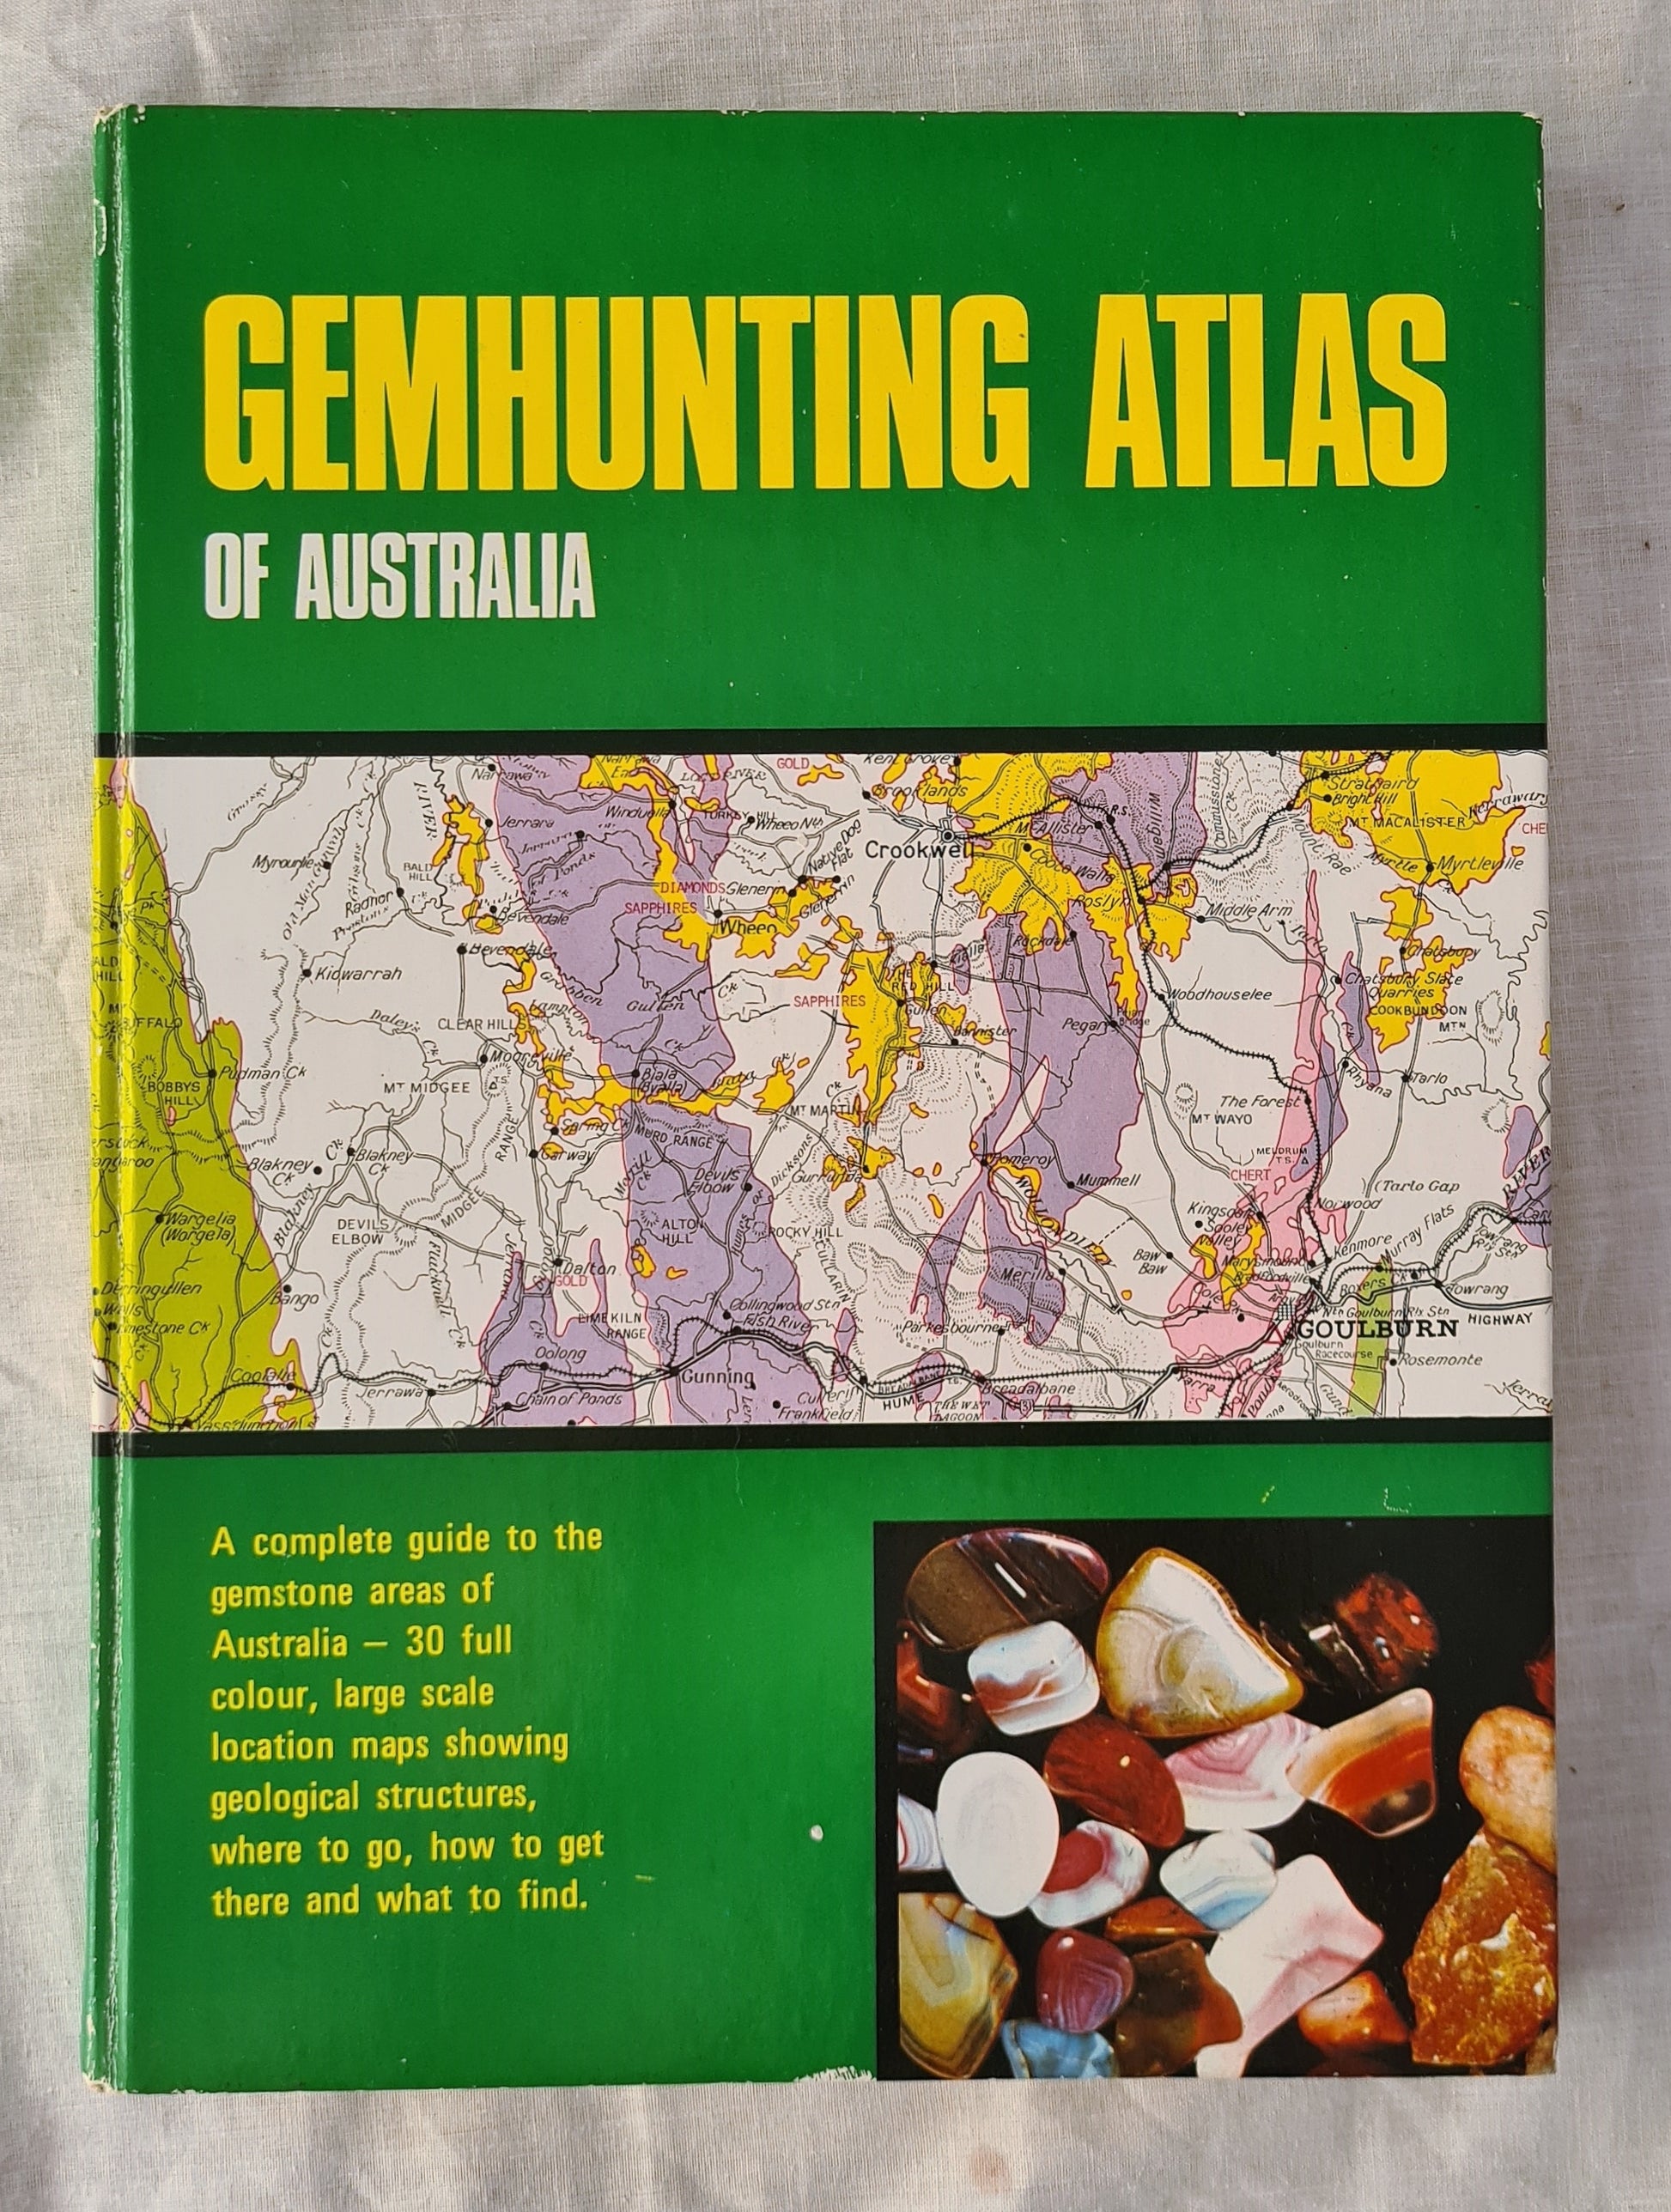 Gemhunting Atlas of Australia